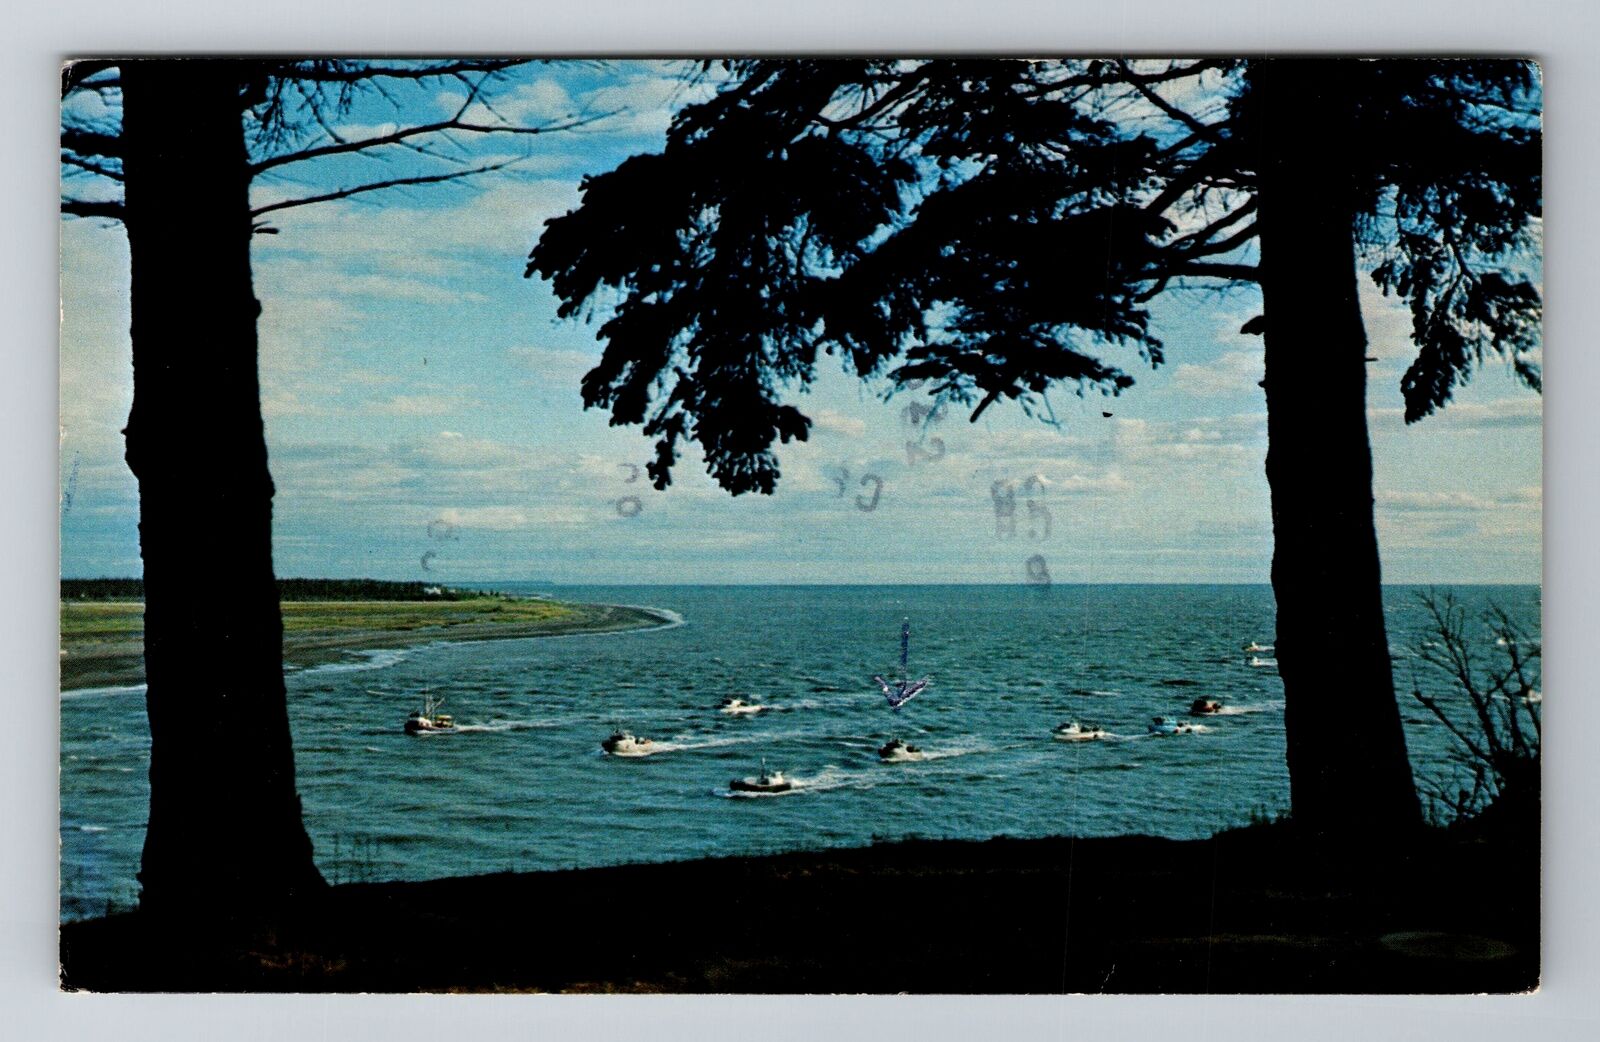 AK-Alaska, Fishing Fleet Returns, Salmon Fishing Boats, Vintage c1977 Postcard